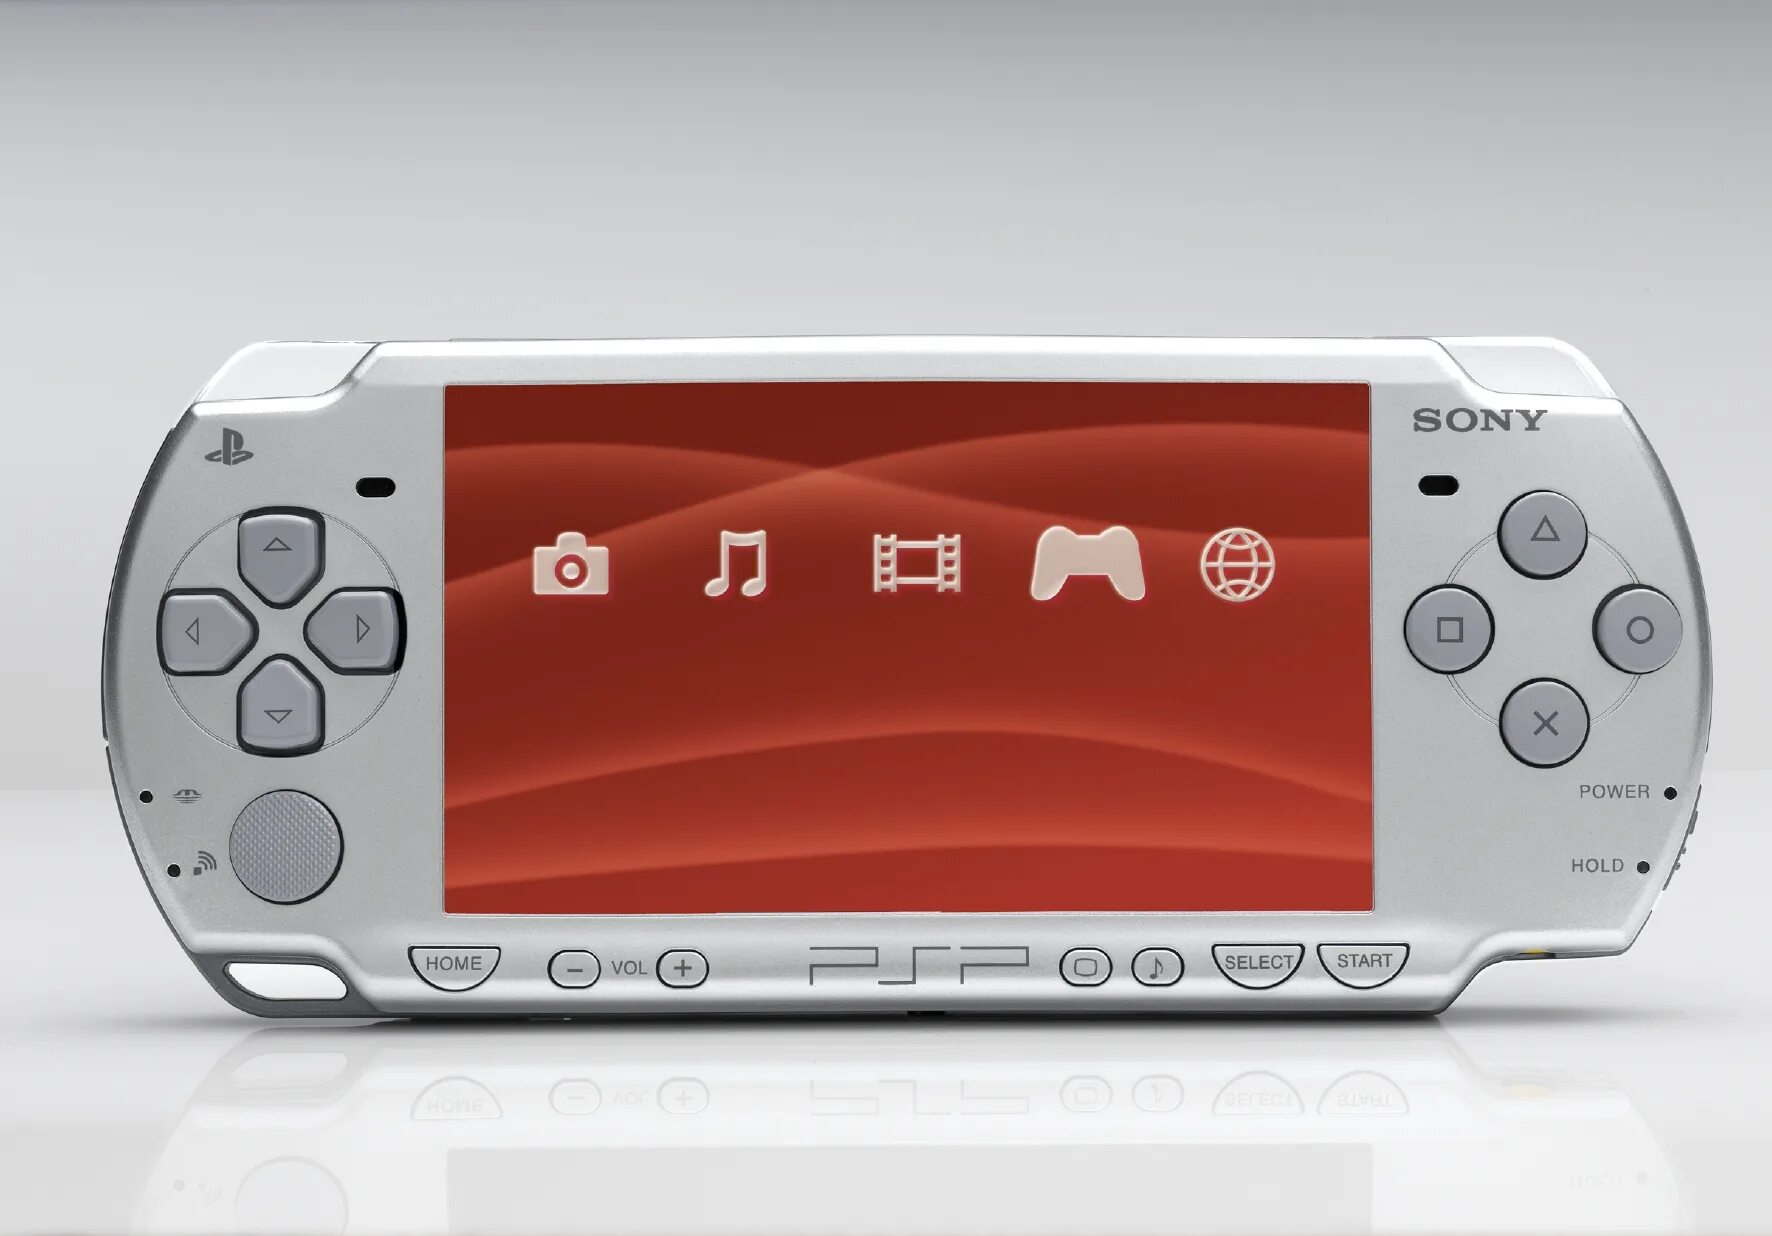 Sony PLAYSTATION Portable Slim & Lite PSP-3000. Sony PSP 3008 Slim. PSP 3008 Silver. Sony PLAYSTATION Portable 2000. Psp vk